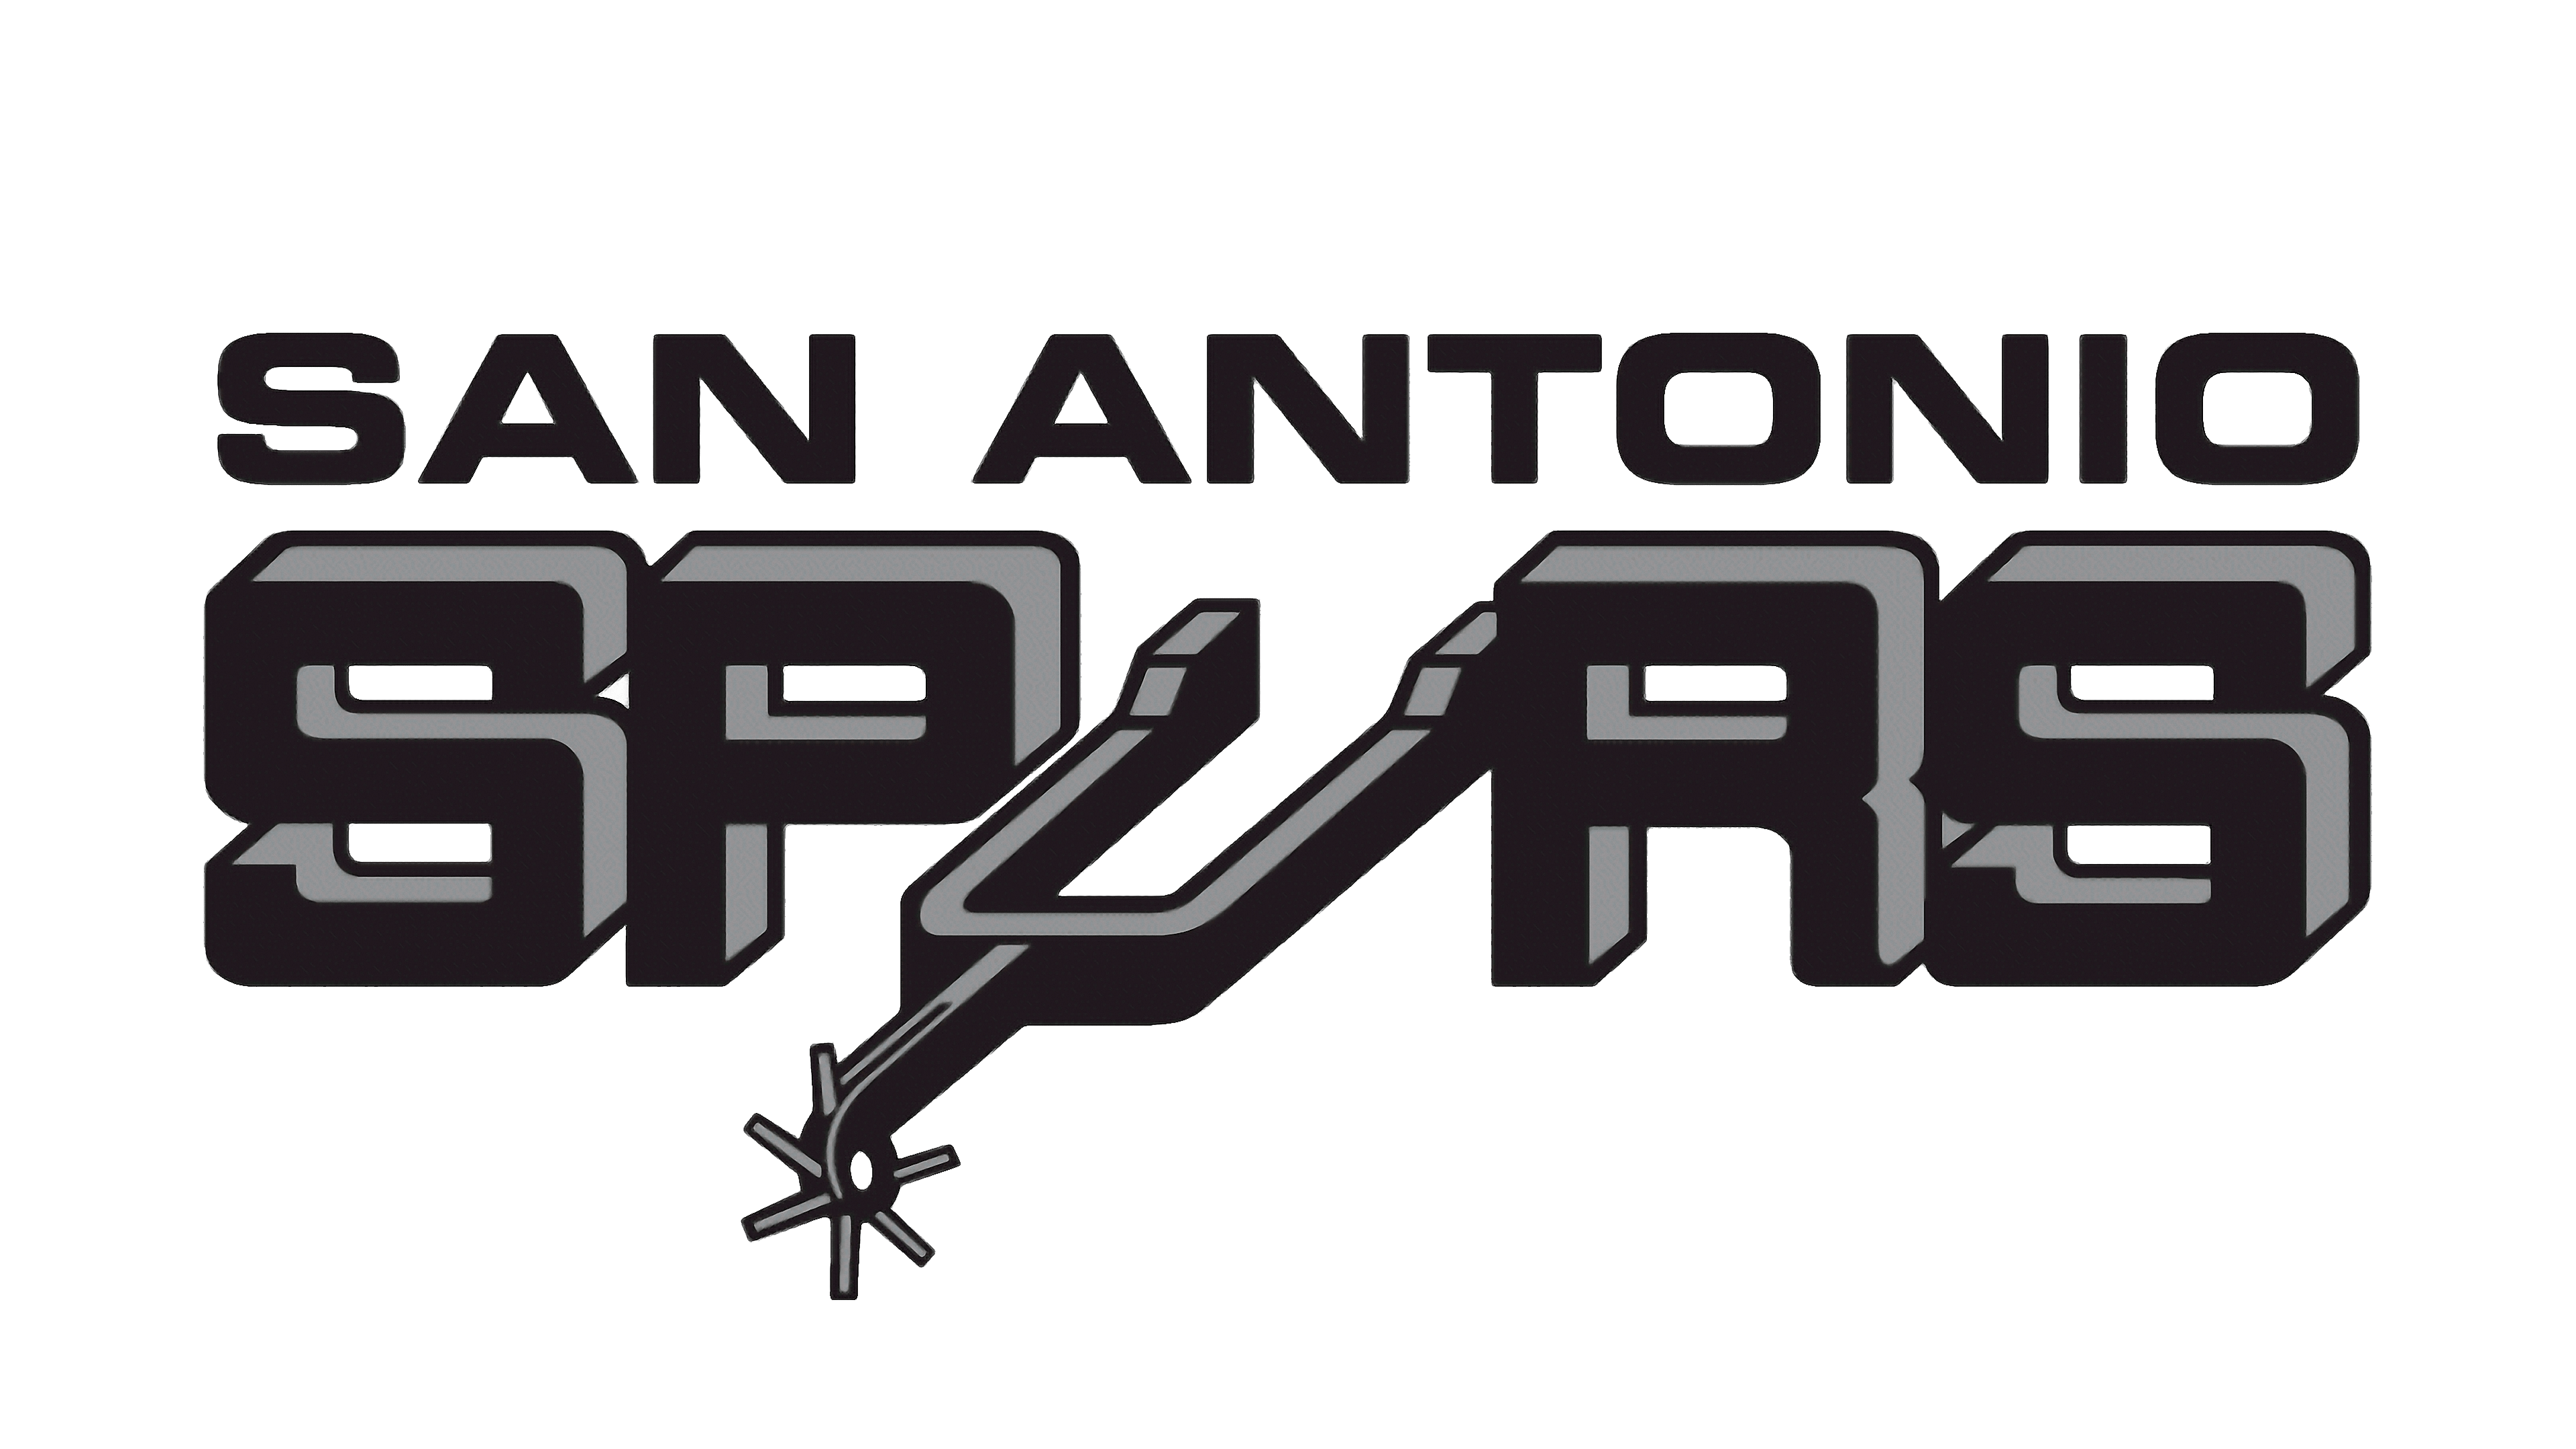 San Antonio Spurs wallpaper by Jansingjames - Download on ZEDGE